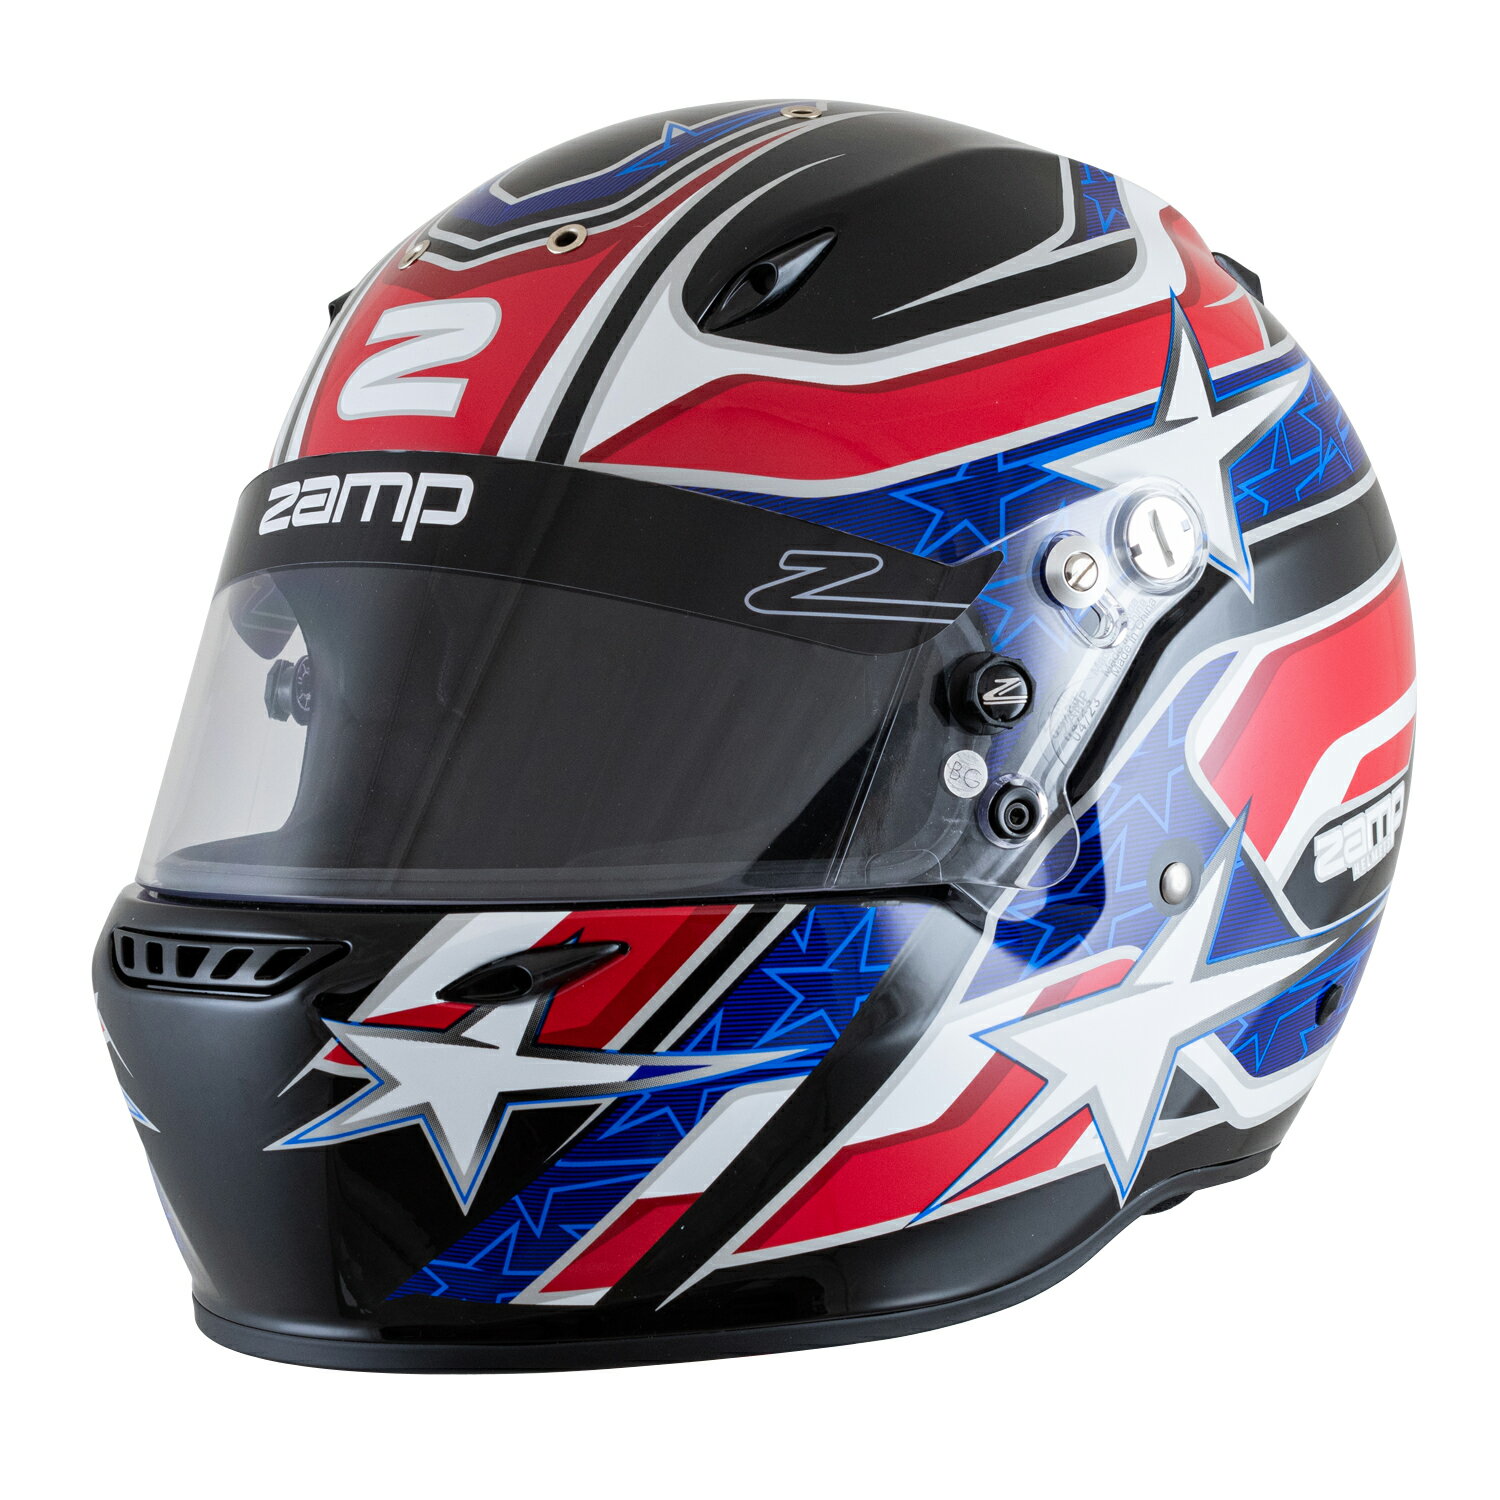 Zamp Helmet ZR-72 Graphic Gloss Black/Red/Blue グロス ブラック/レッド/ブルー グラフィック Snell SA2020 / FIA 8859-2015 ザンプ..